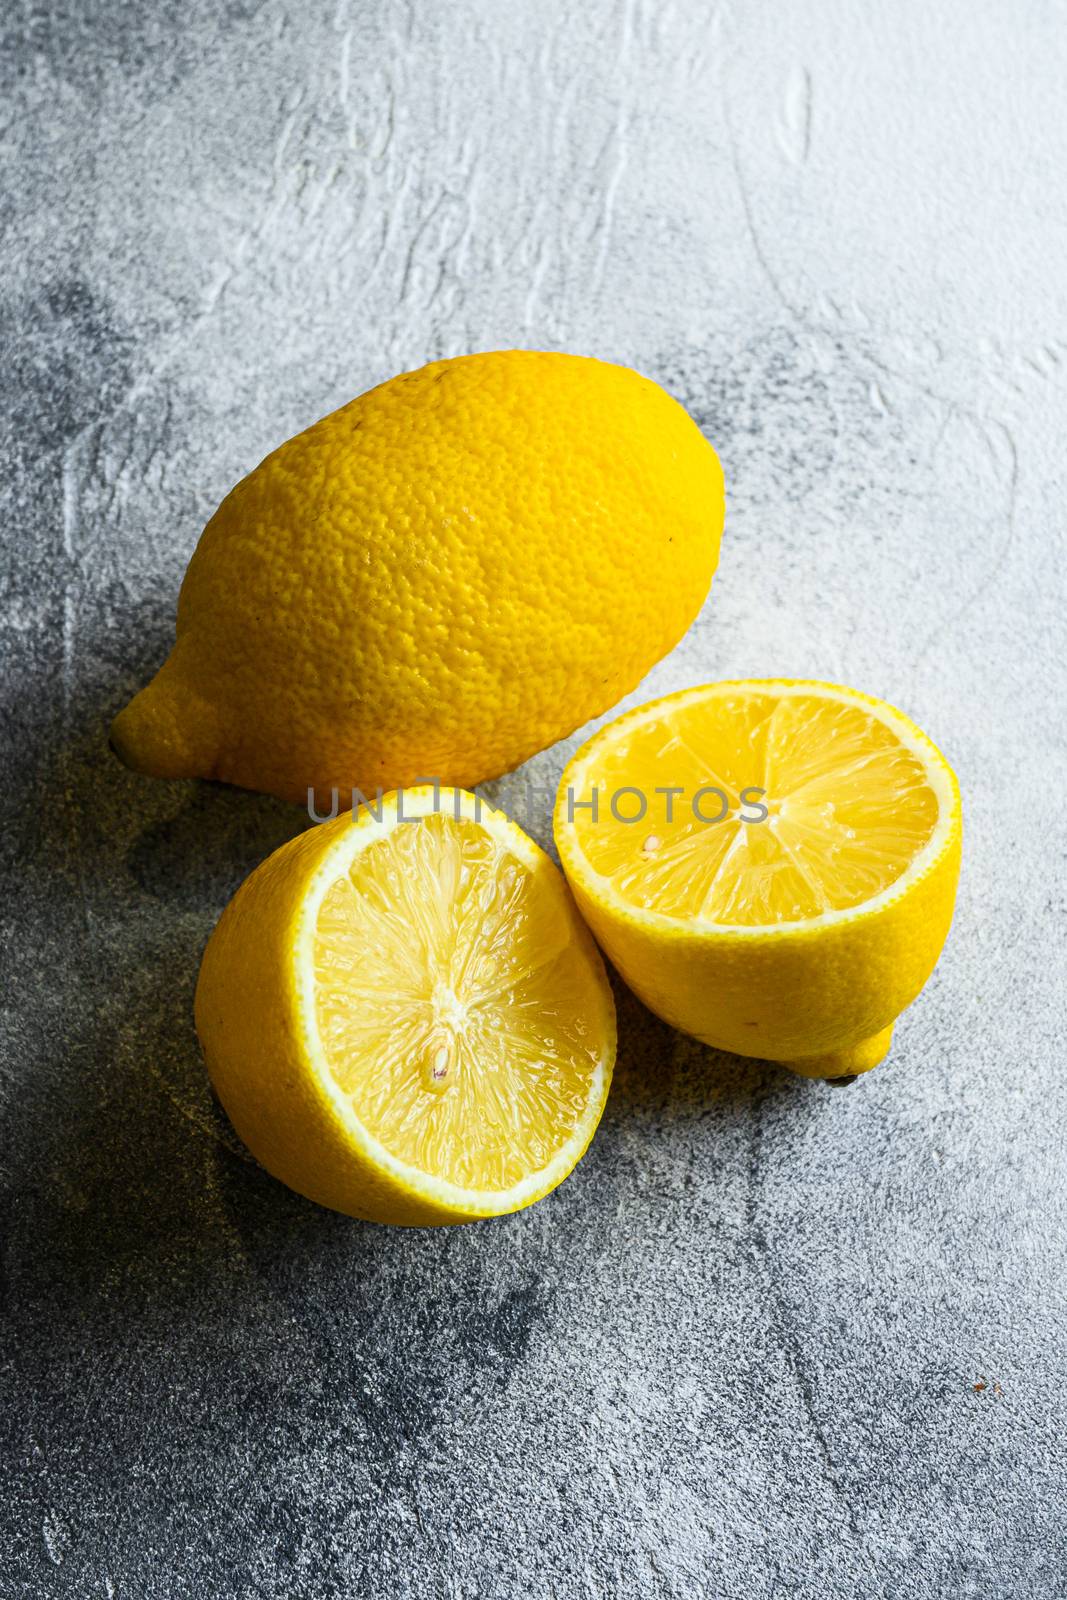 Delicious sliced citrus fruit Whole yellow lemon and lemon cut half, top view, copy space. Fresh citrus fruits, vitamin c source on grey background.